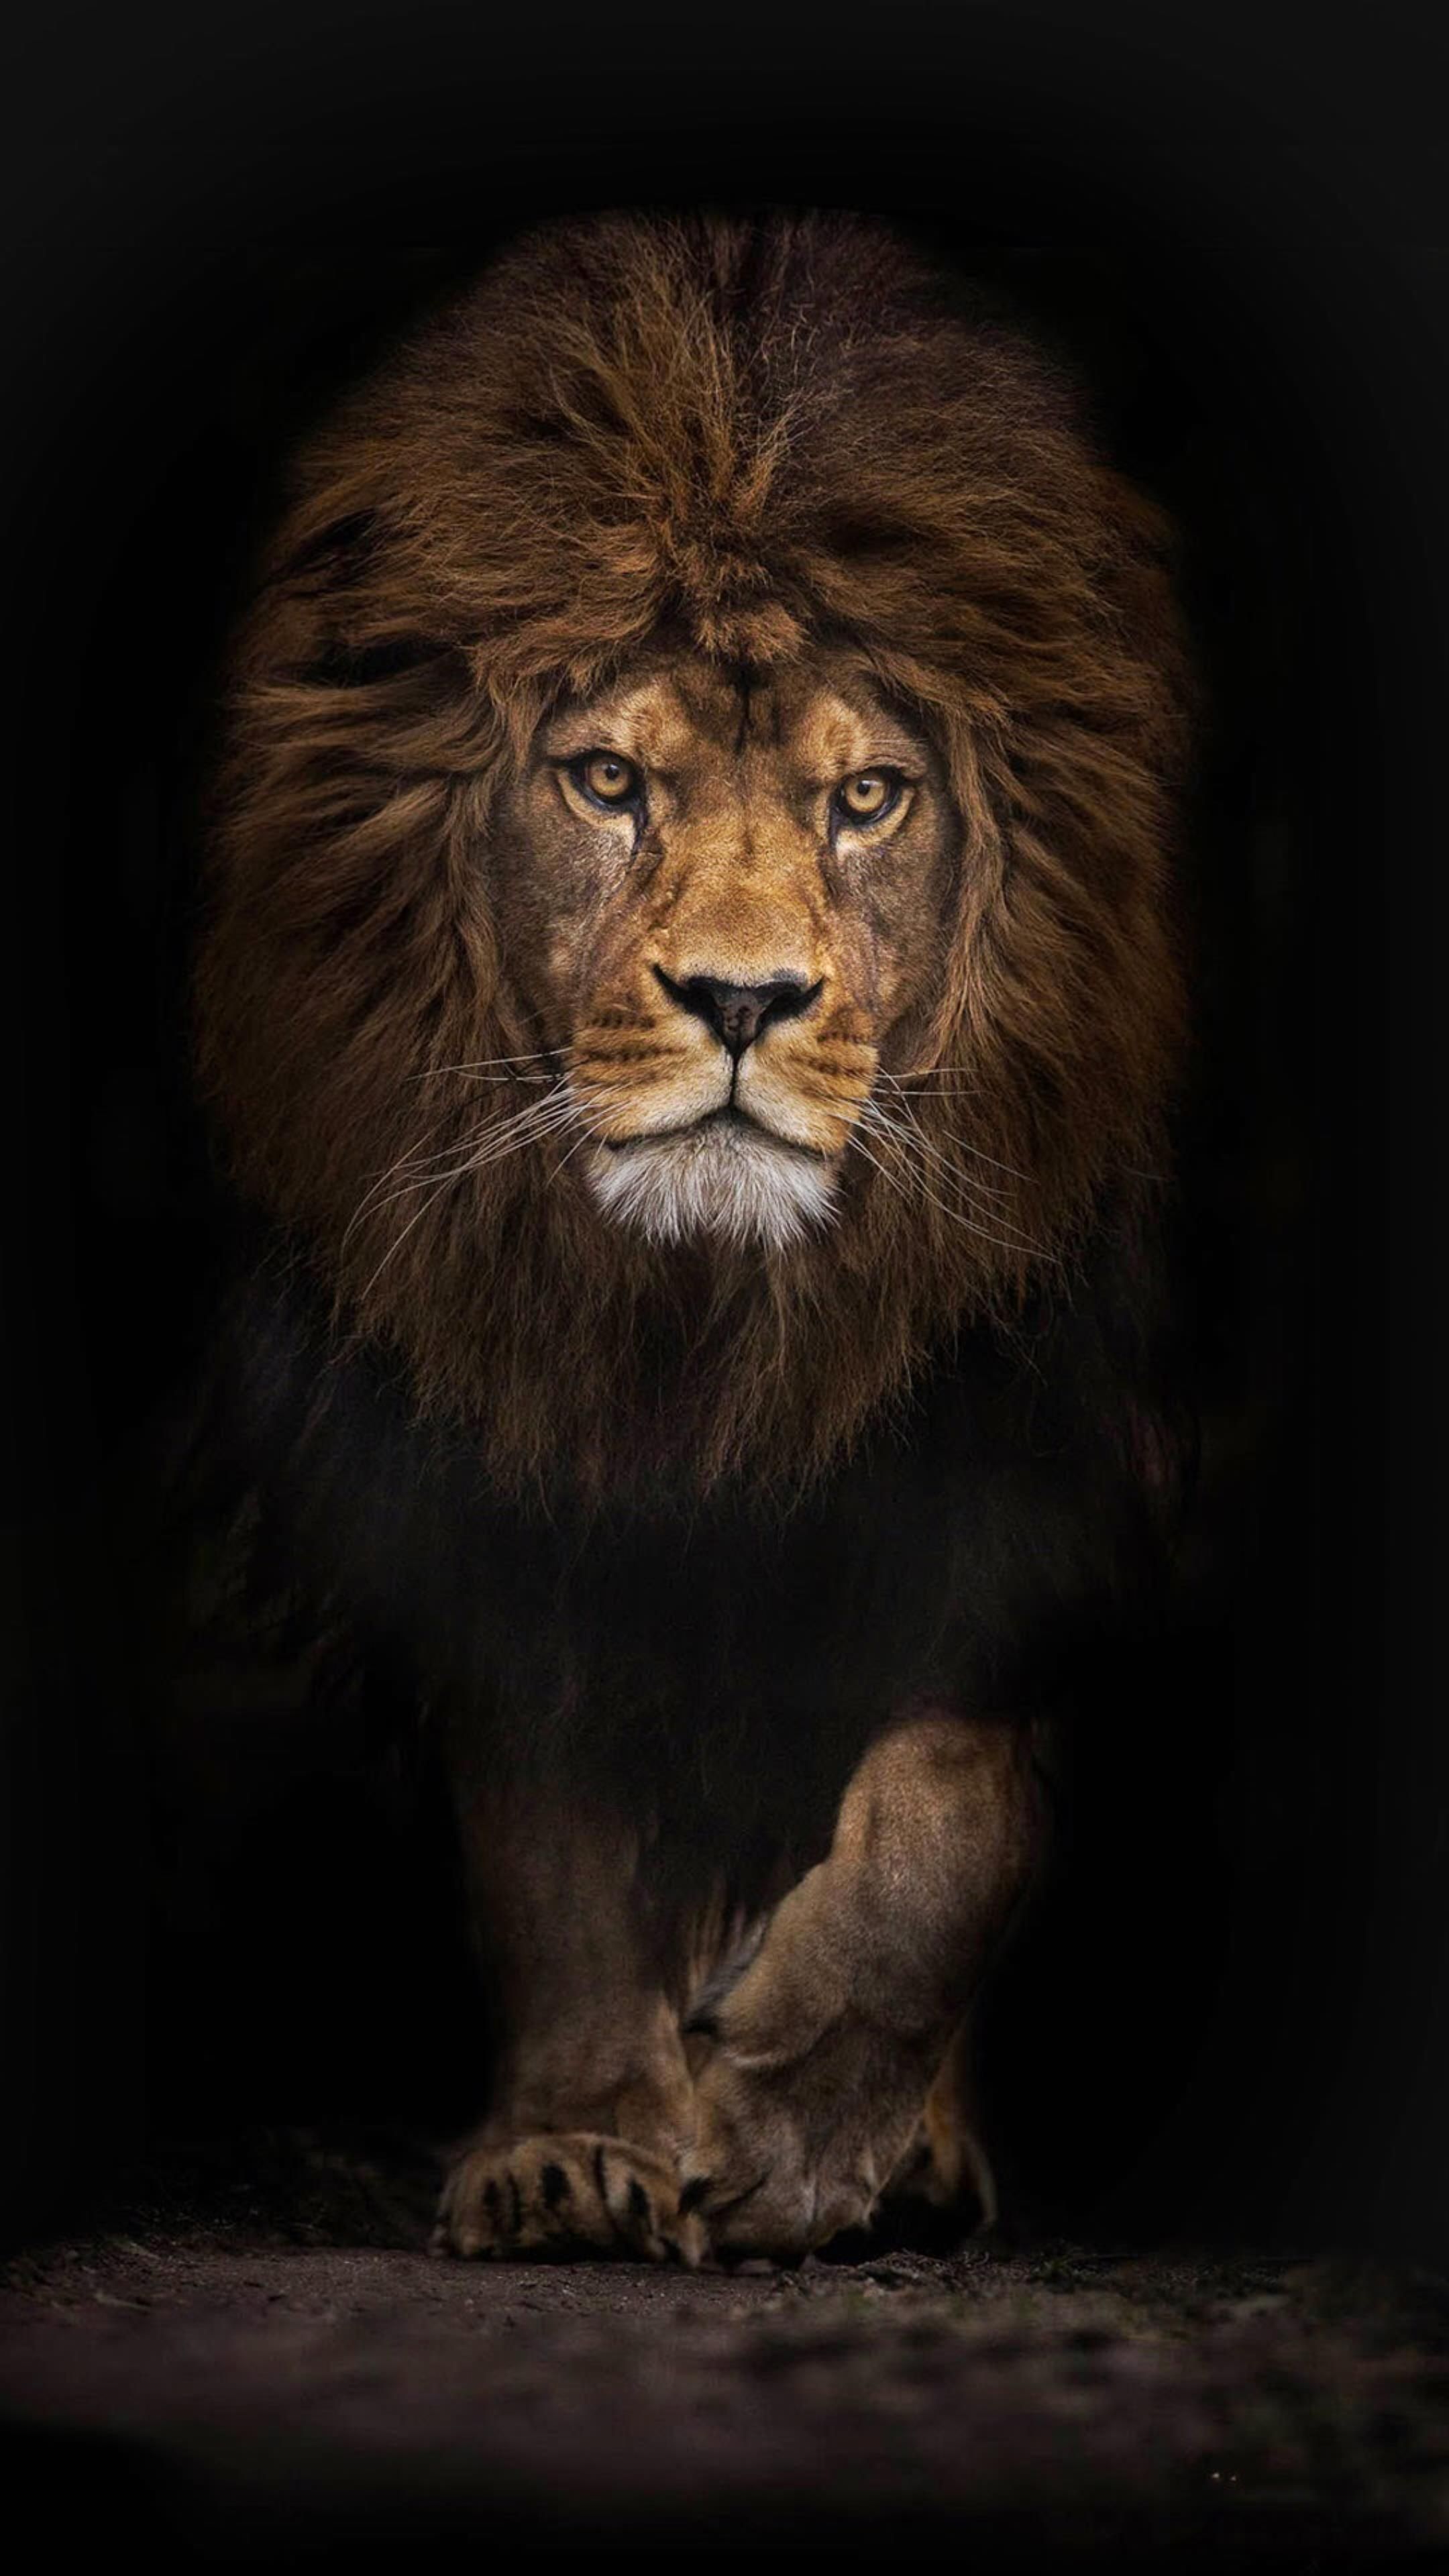 AMOLED Animal Wallpaper. Lion wallpaper, Big cats